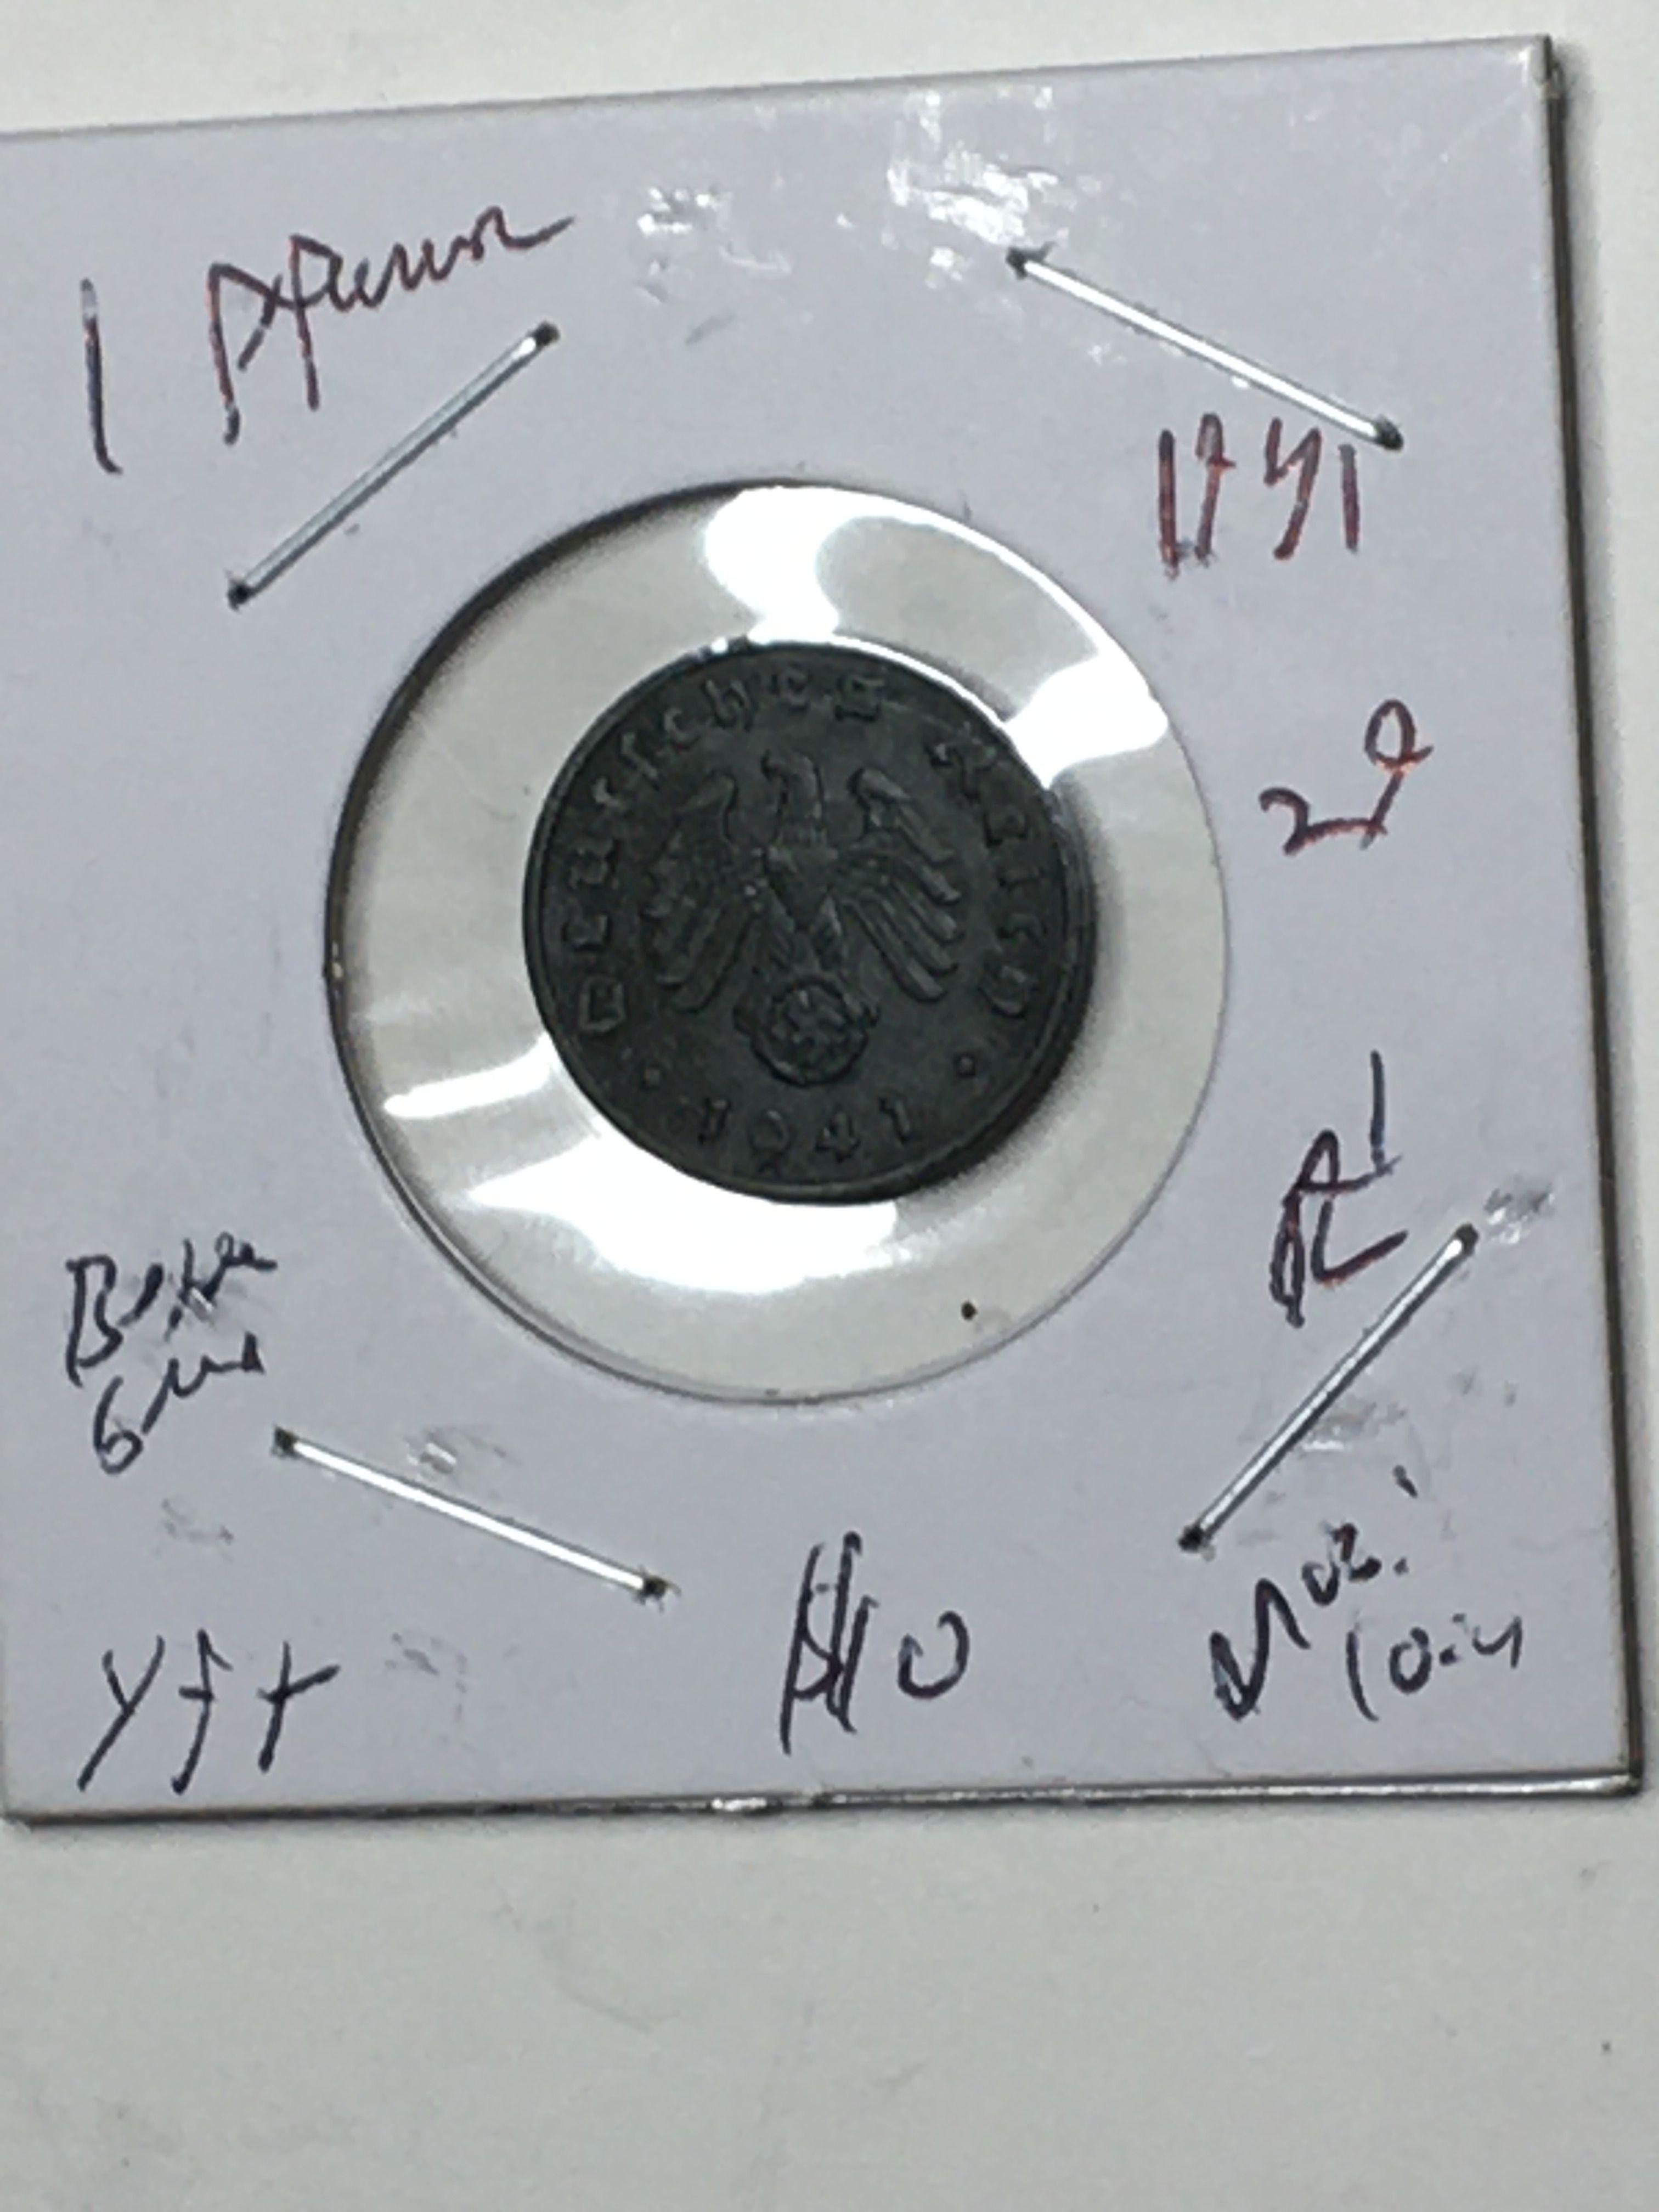 German 1 Pfenig Nazi Coin 1941 Better Grade